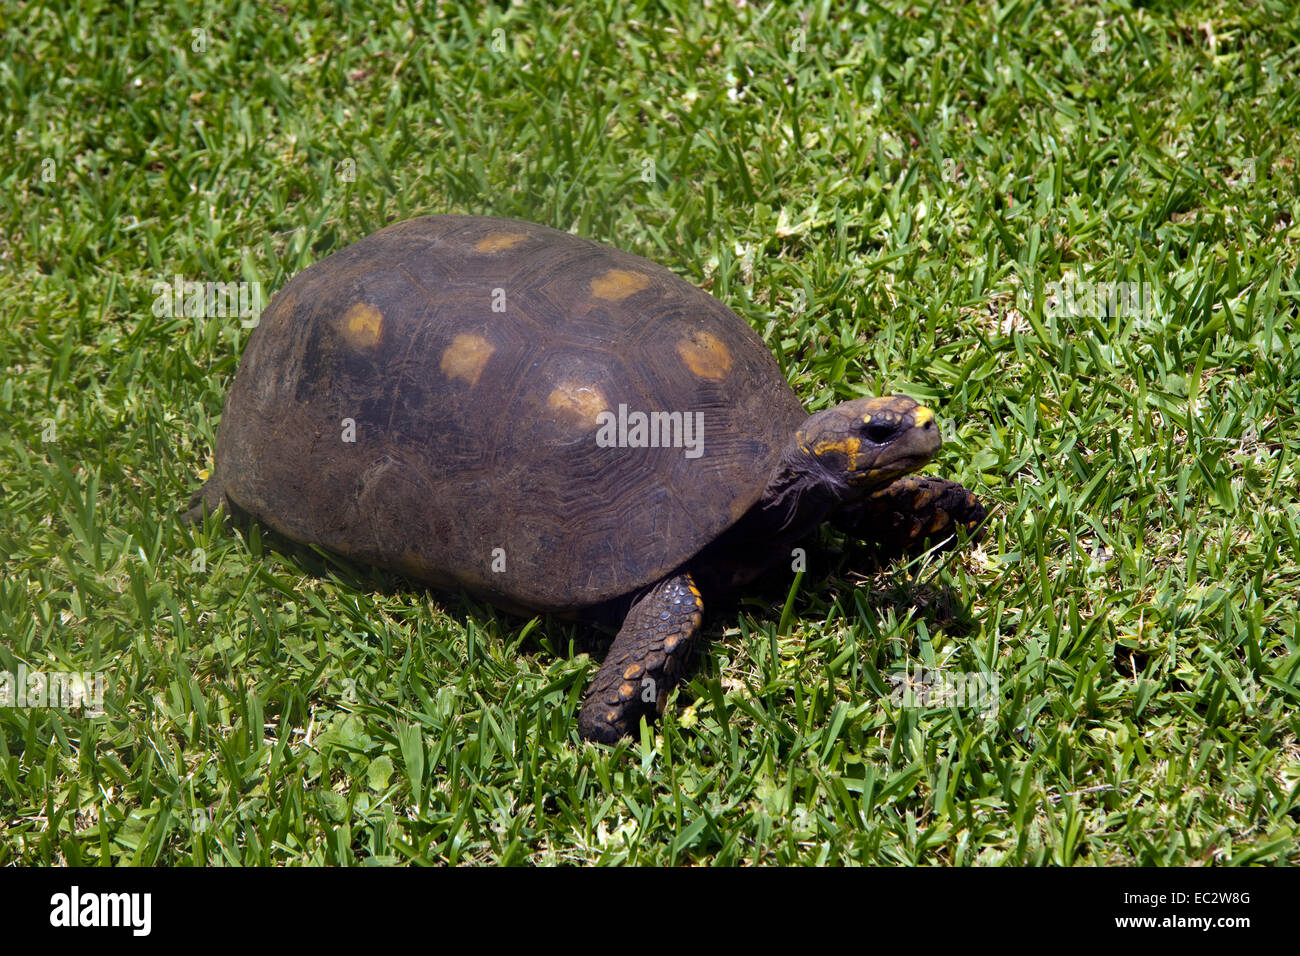 Tortoise on grass Grenada Caribbean Stock Photo